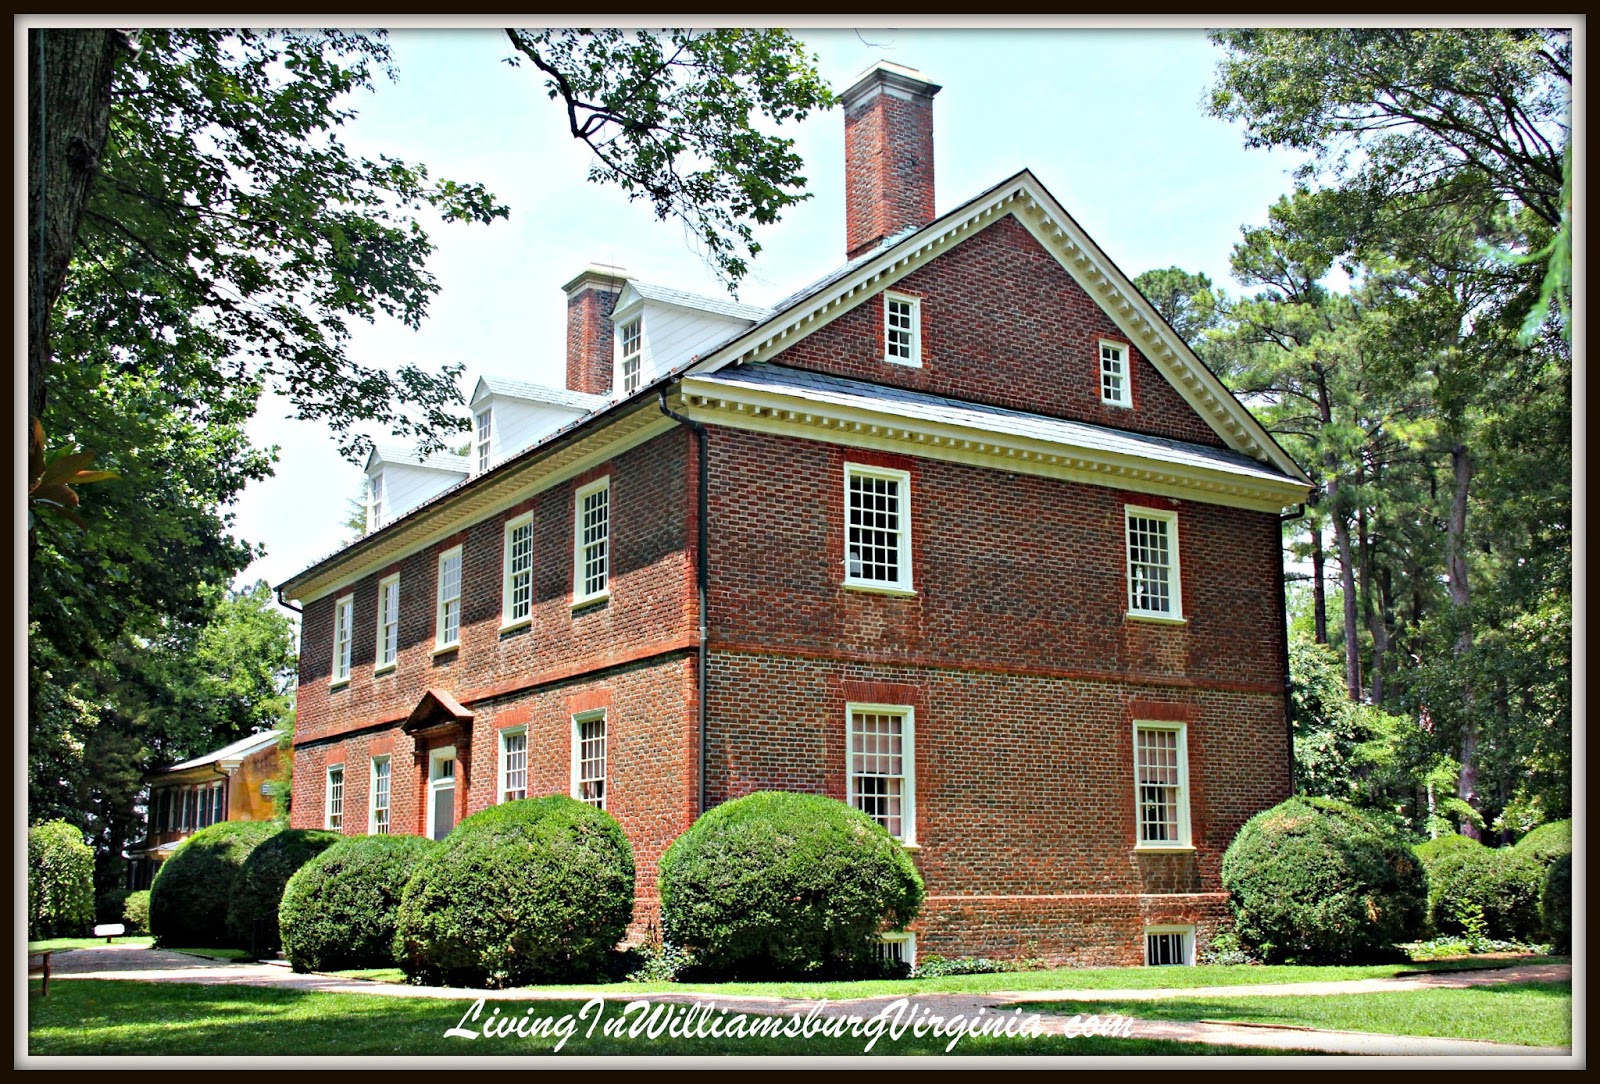 Living In Williamsburg, Virginia: Berkeley Plantation, Charles City